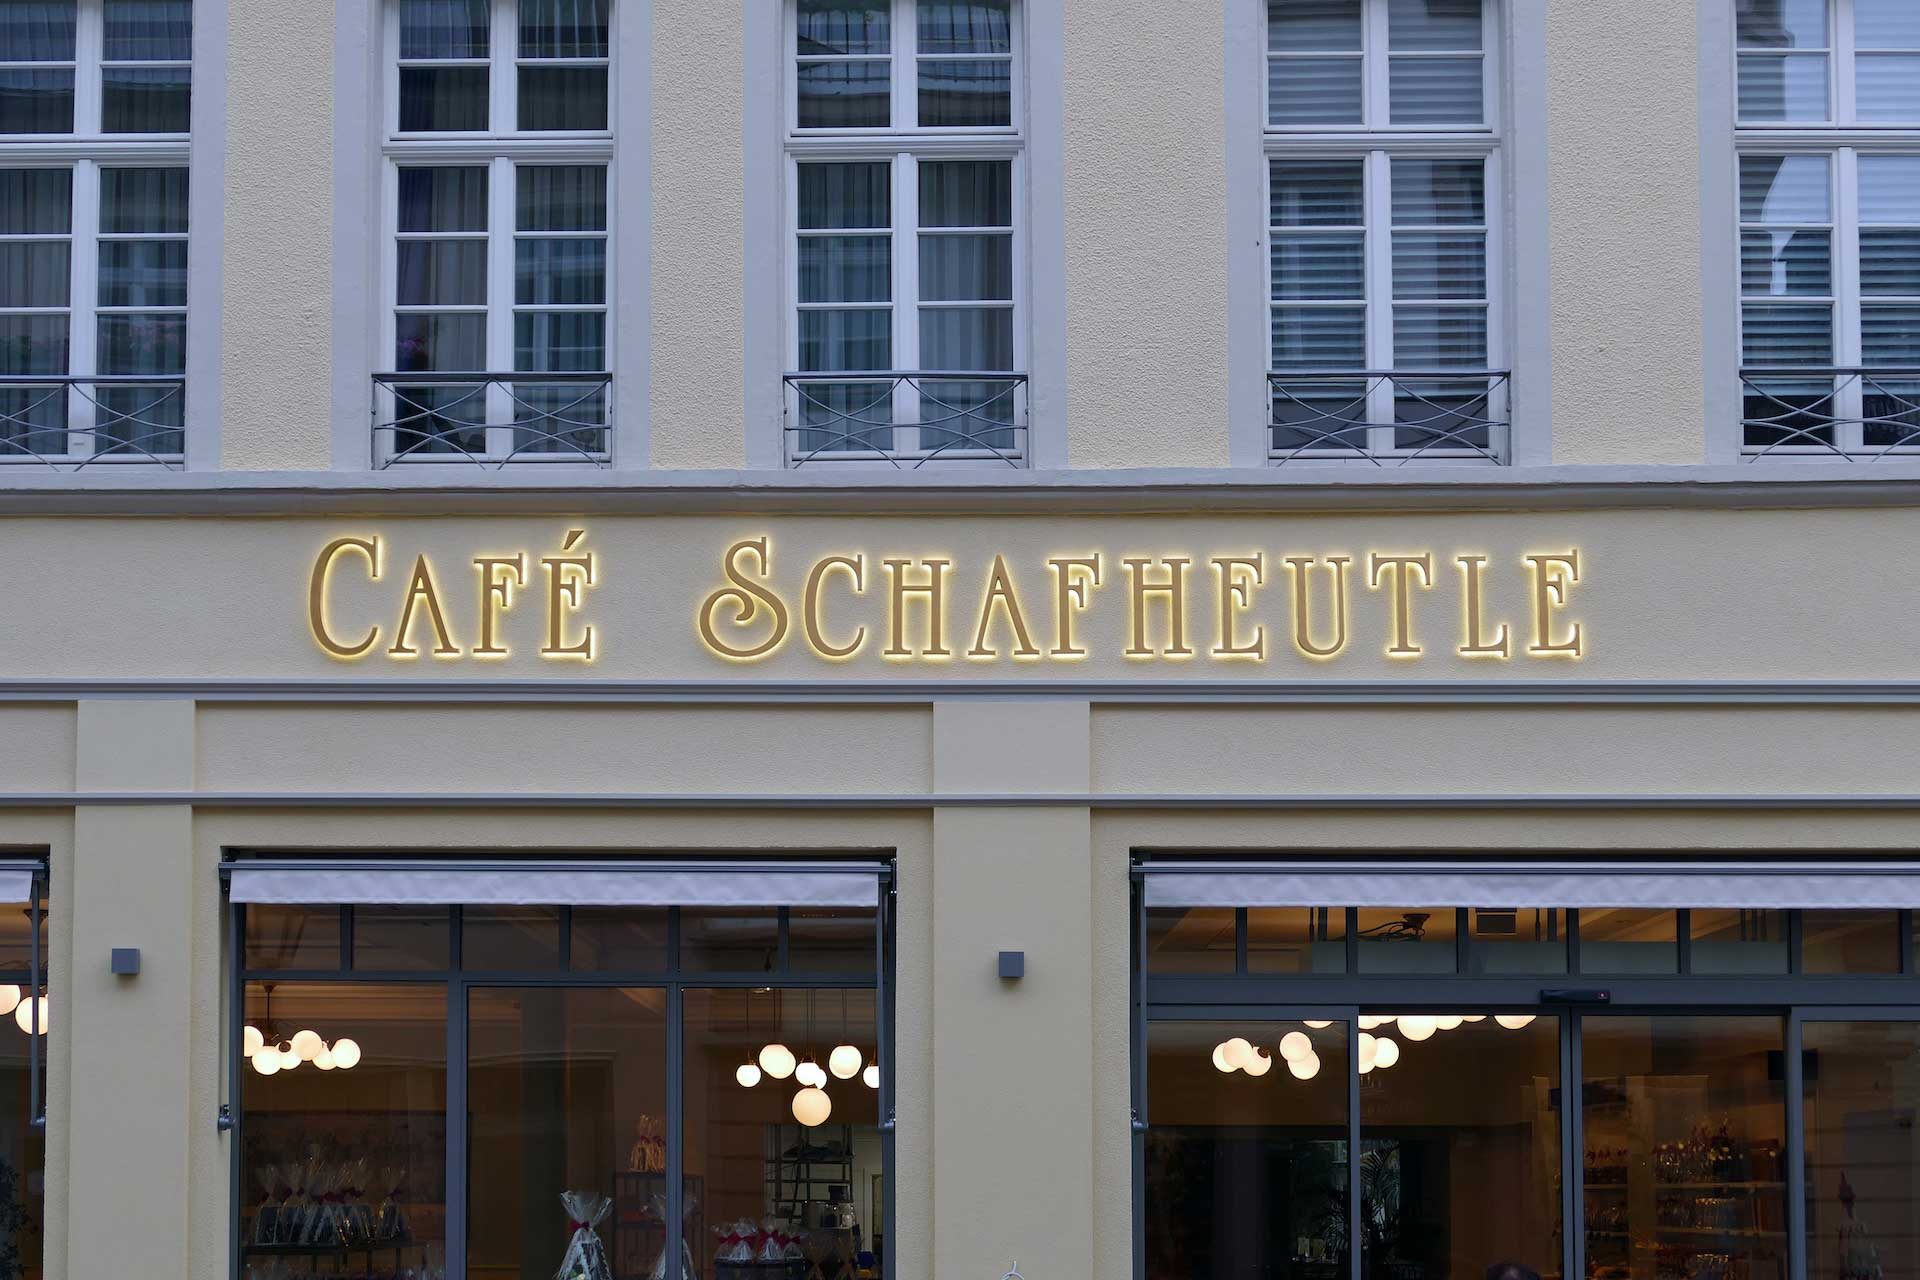 Café Konditorei Schafheutle in Heidelberg